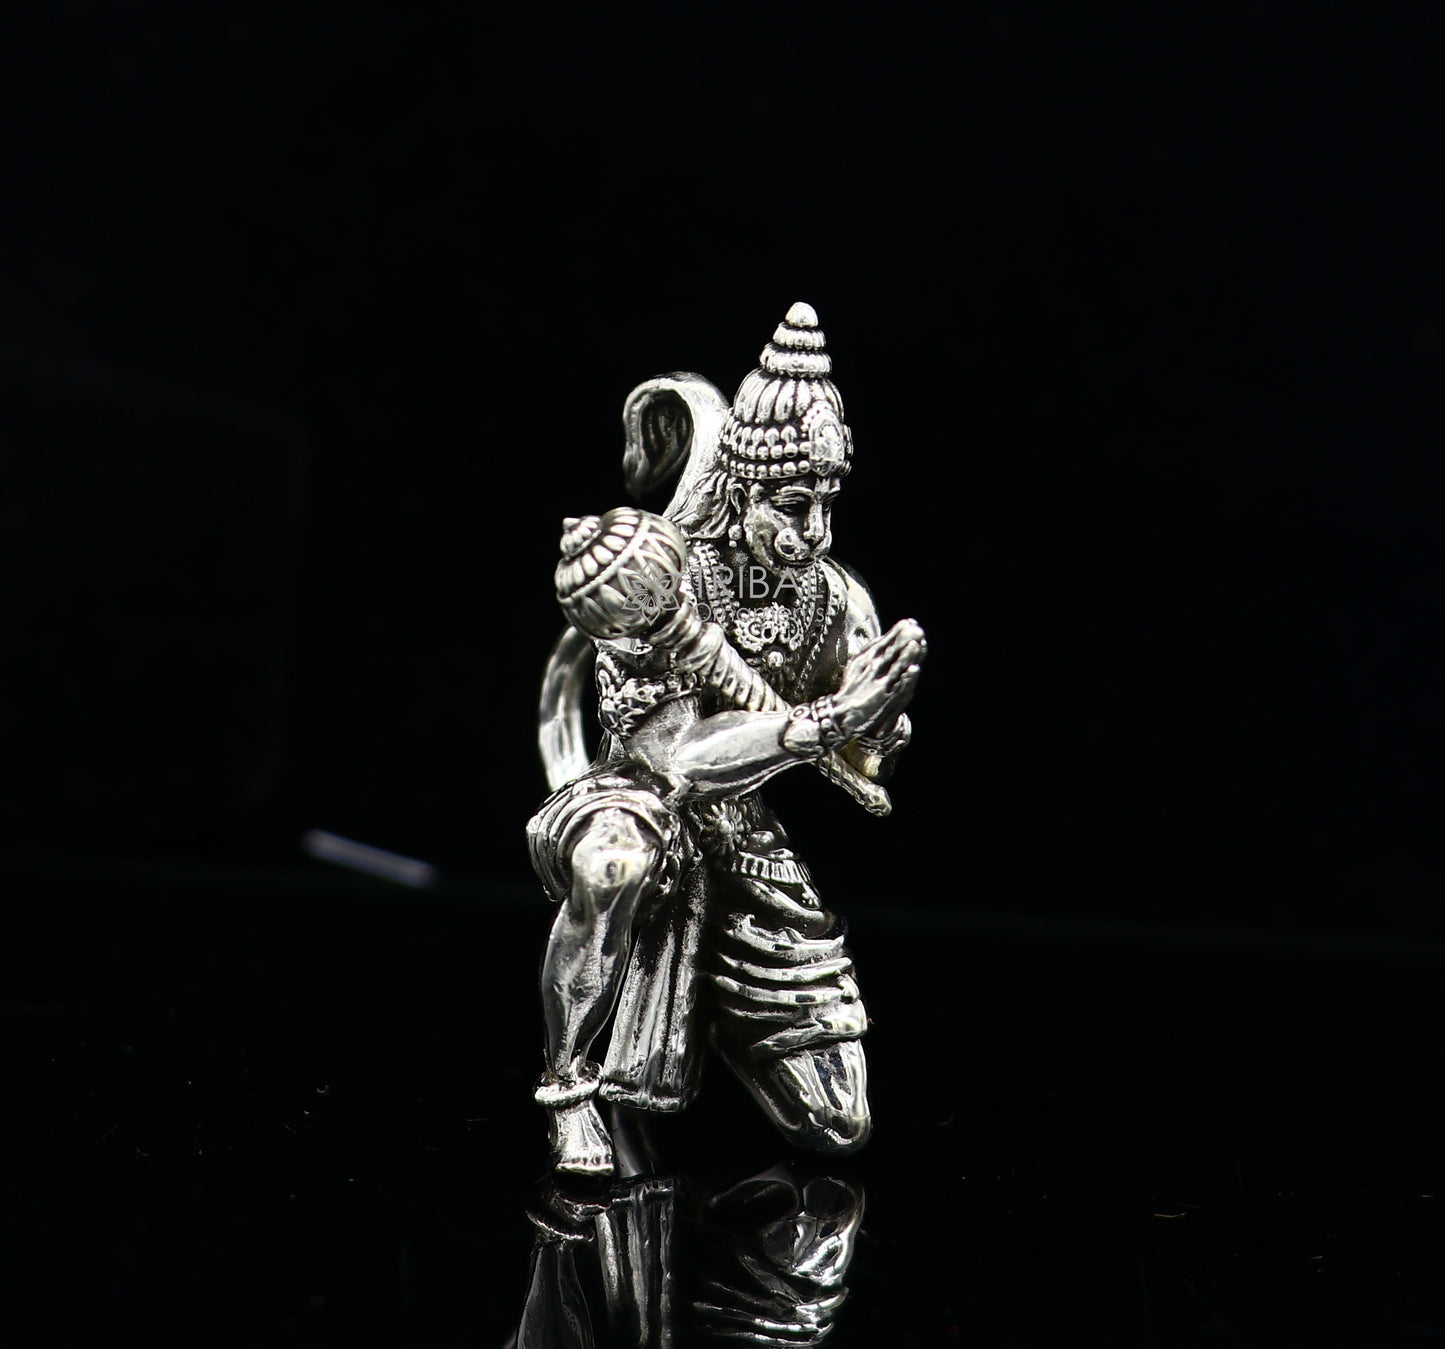 2.0" 925 silver handmade Lord hanuman statue, best puja or gifting god hanuman statue sculpture home temple puja art figurine art620 - TRIBAL ORNAMENTS